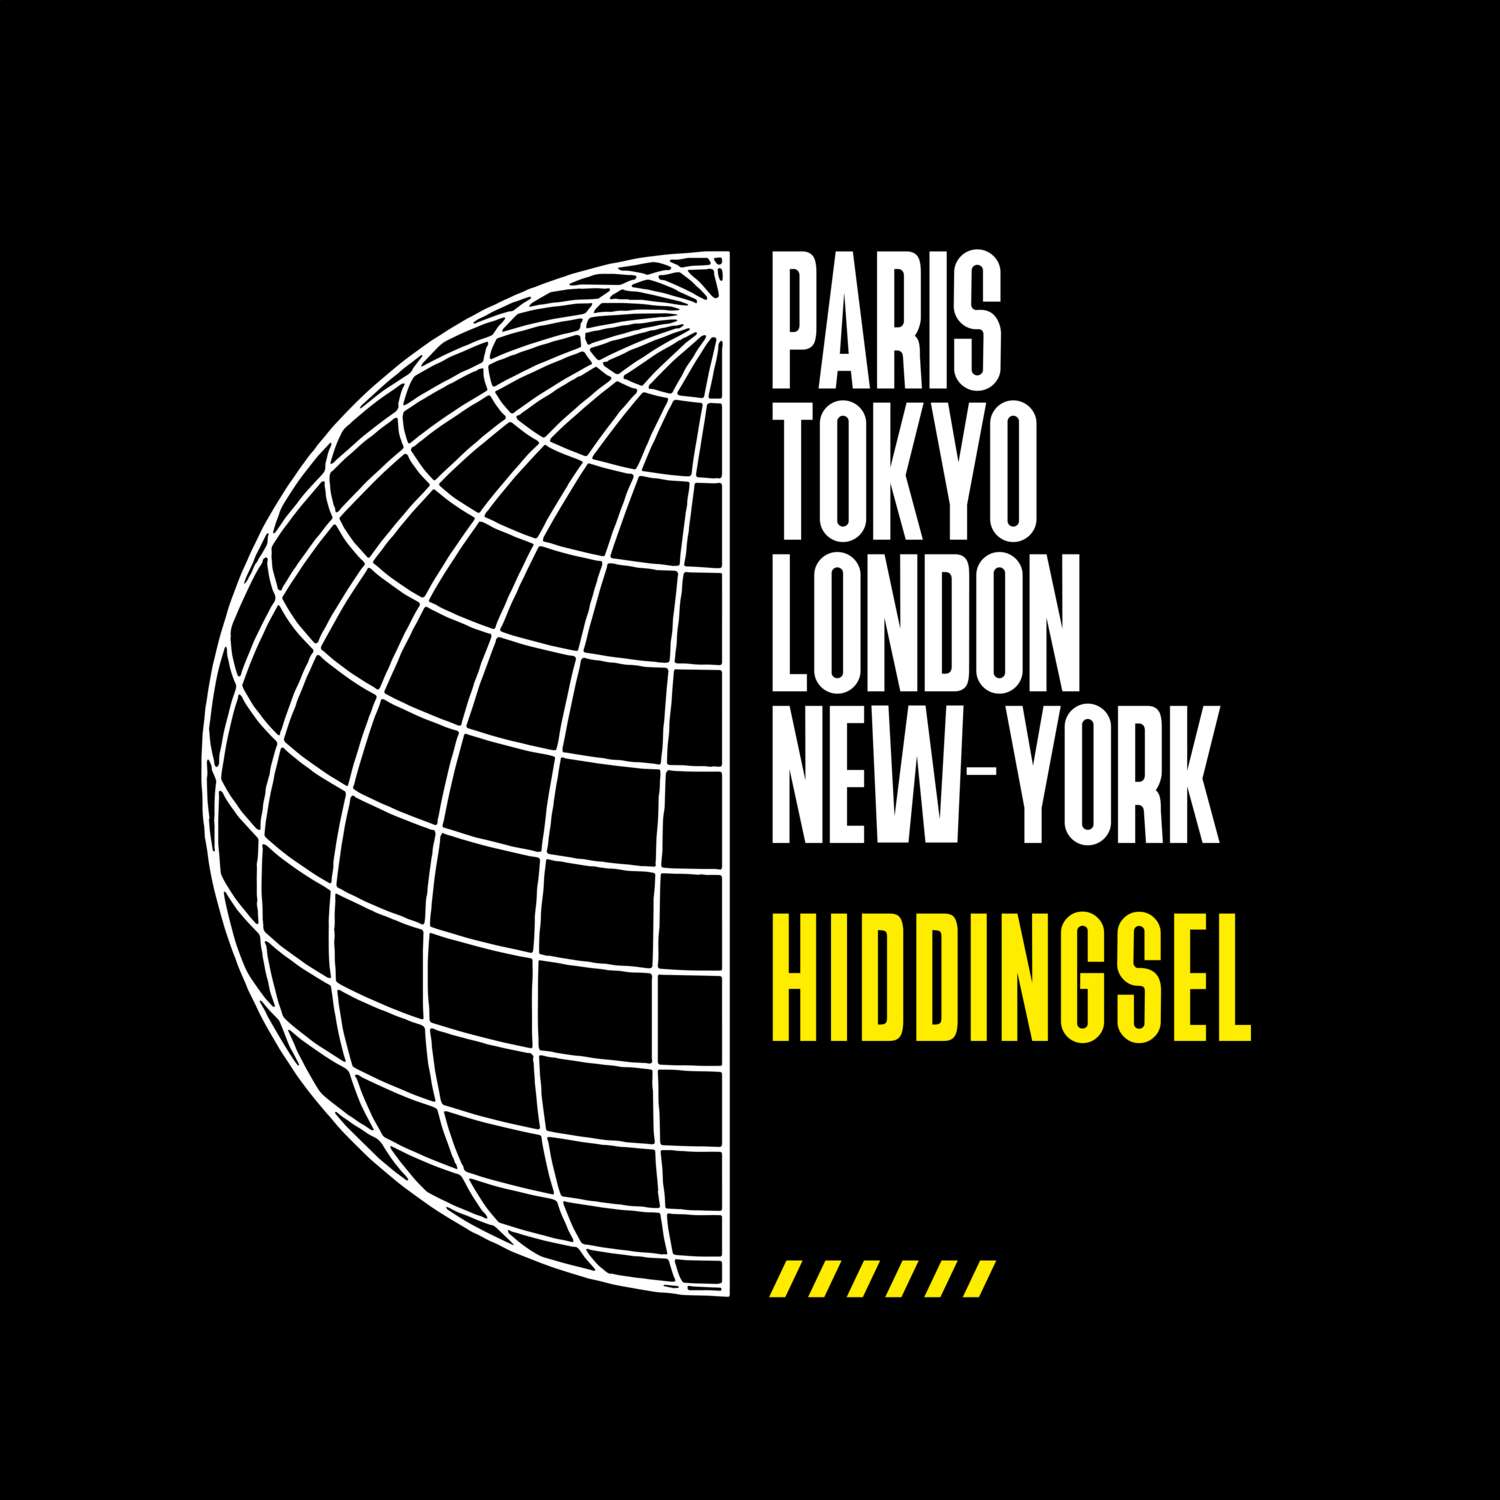 Hiddingsel T-Shirt »Paris Tokyo London«